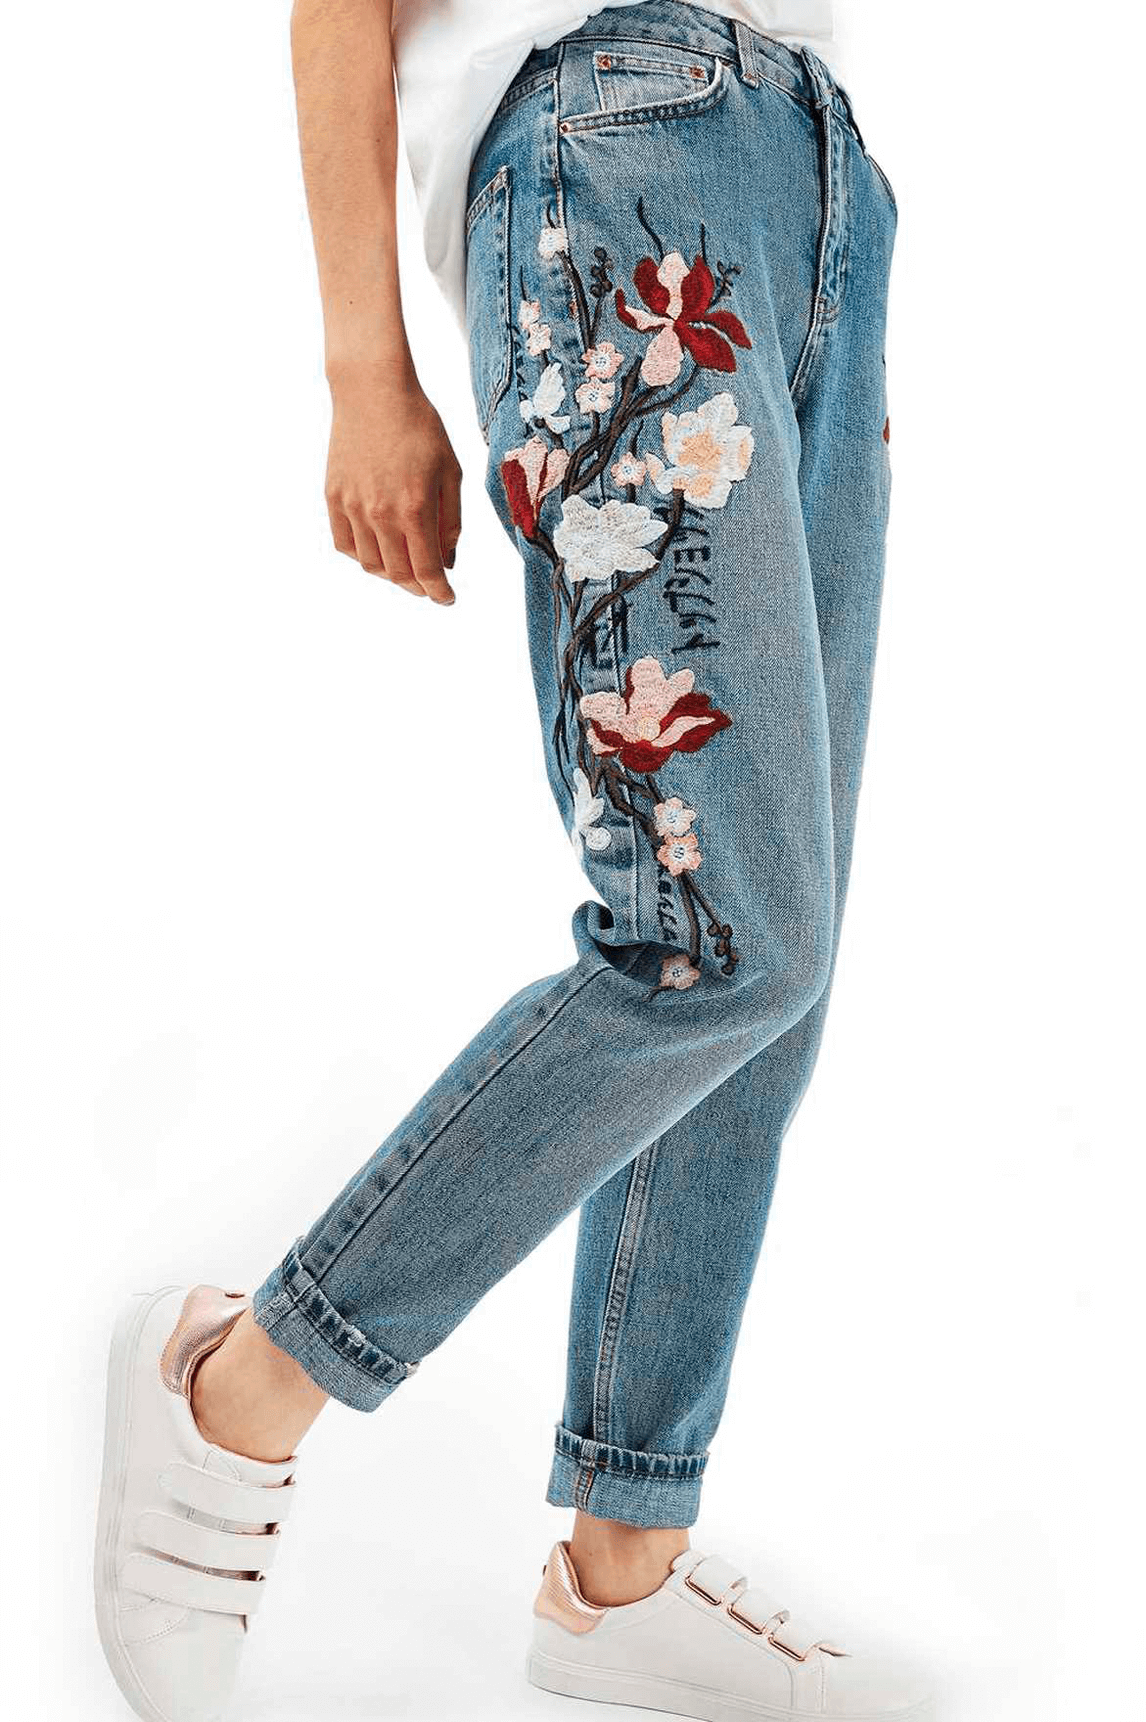 customiza-pantalones-flores-bordadas-jeans - Handfie DIY